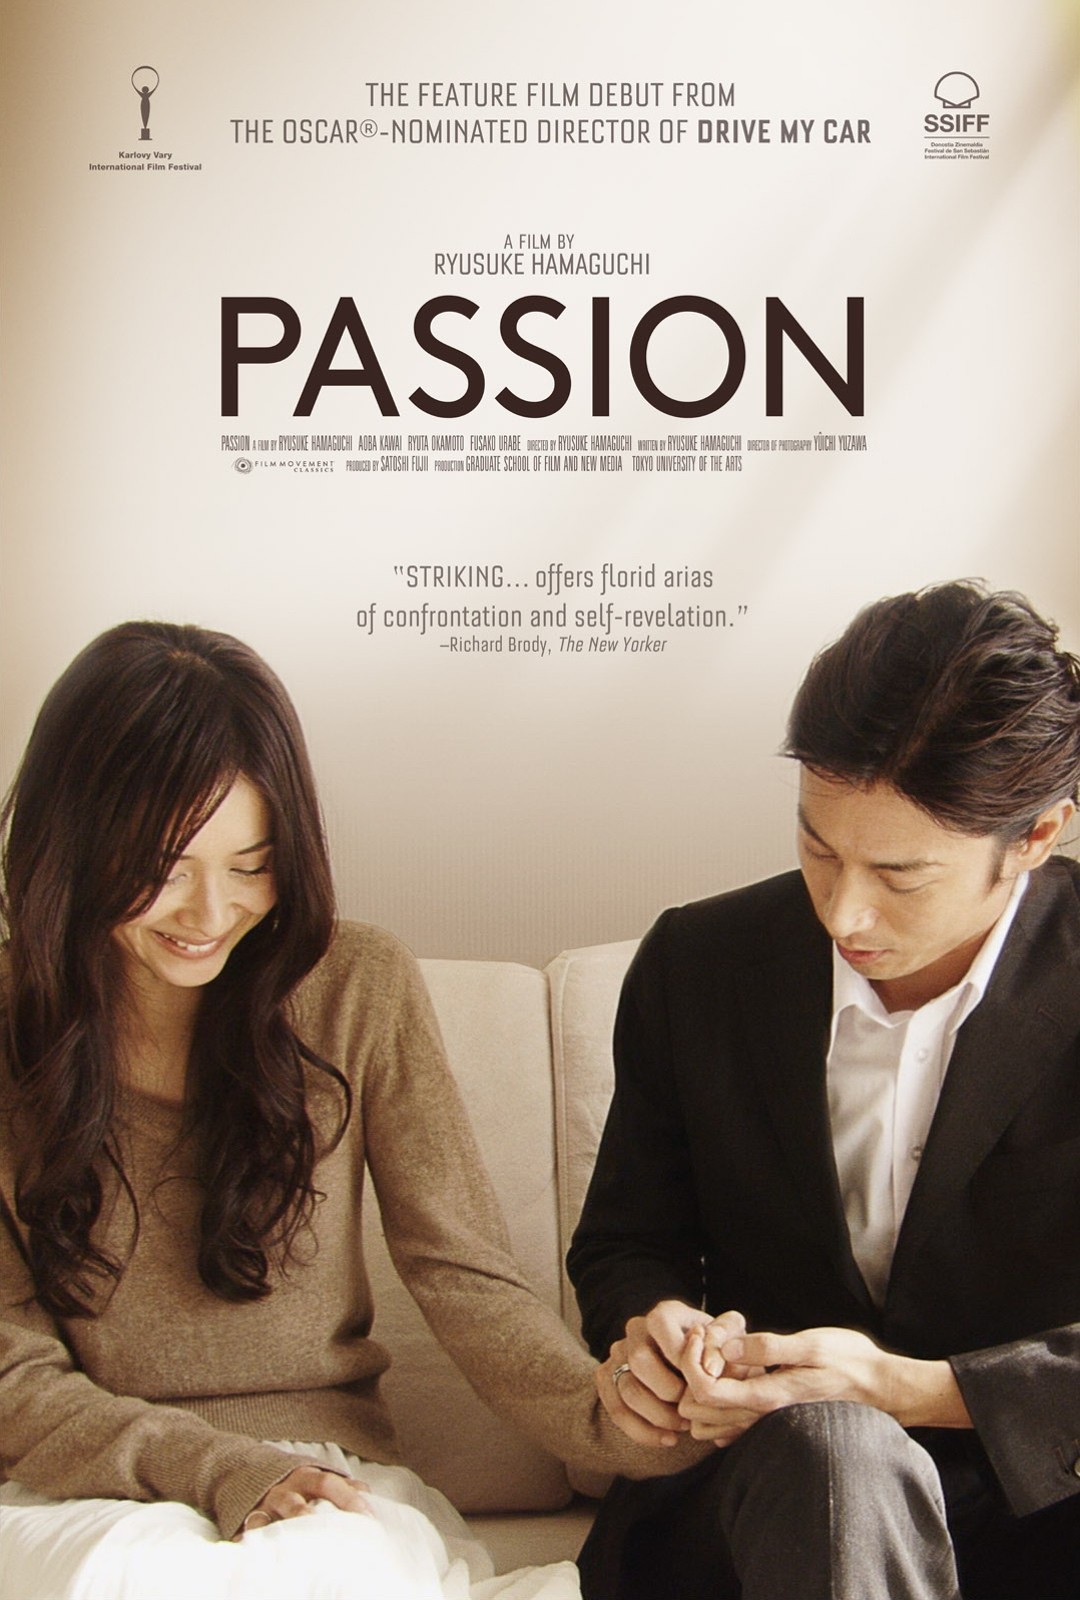 Cinema Passion, the movie store